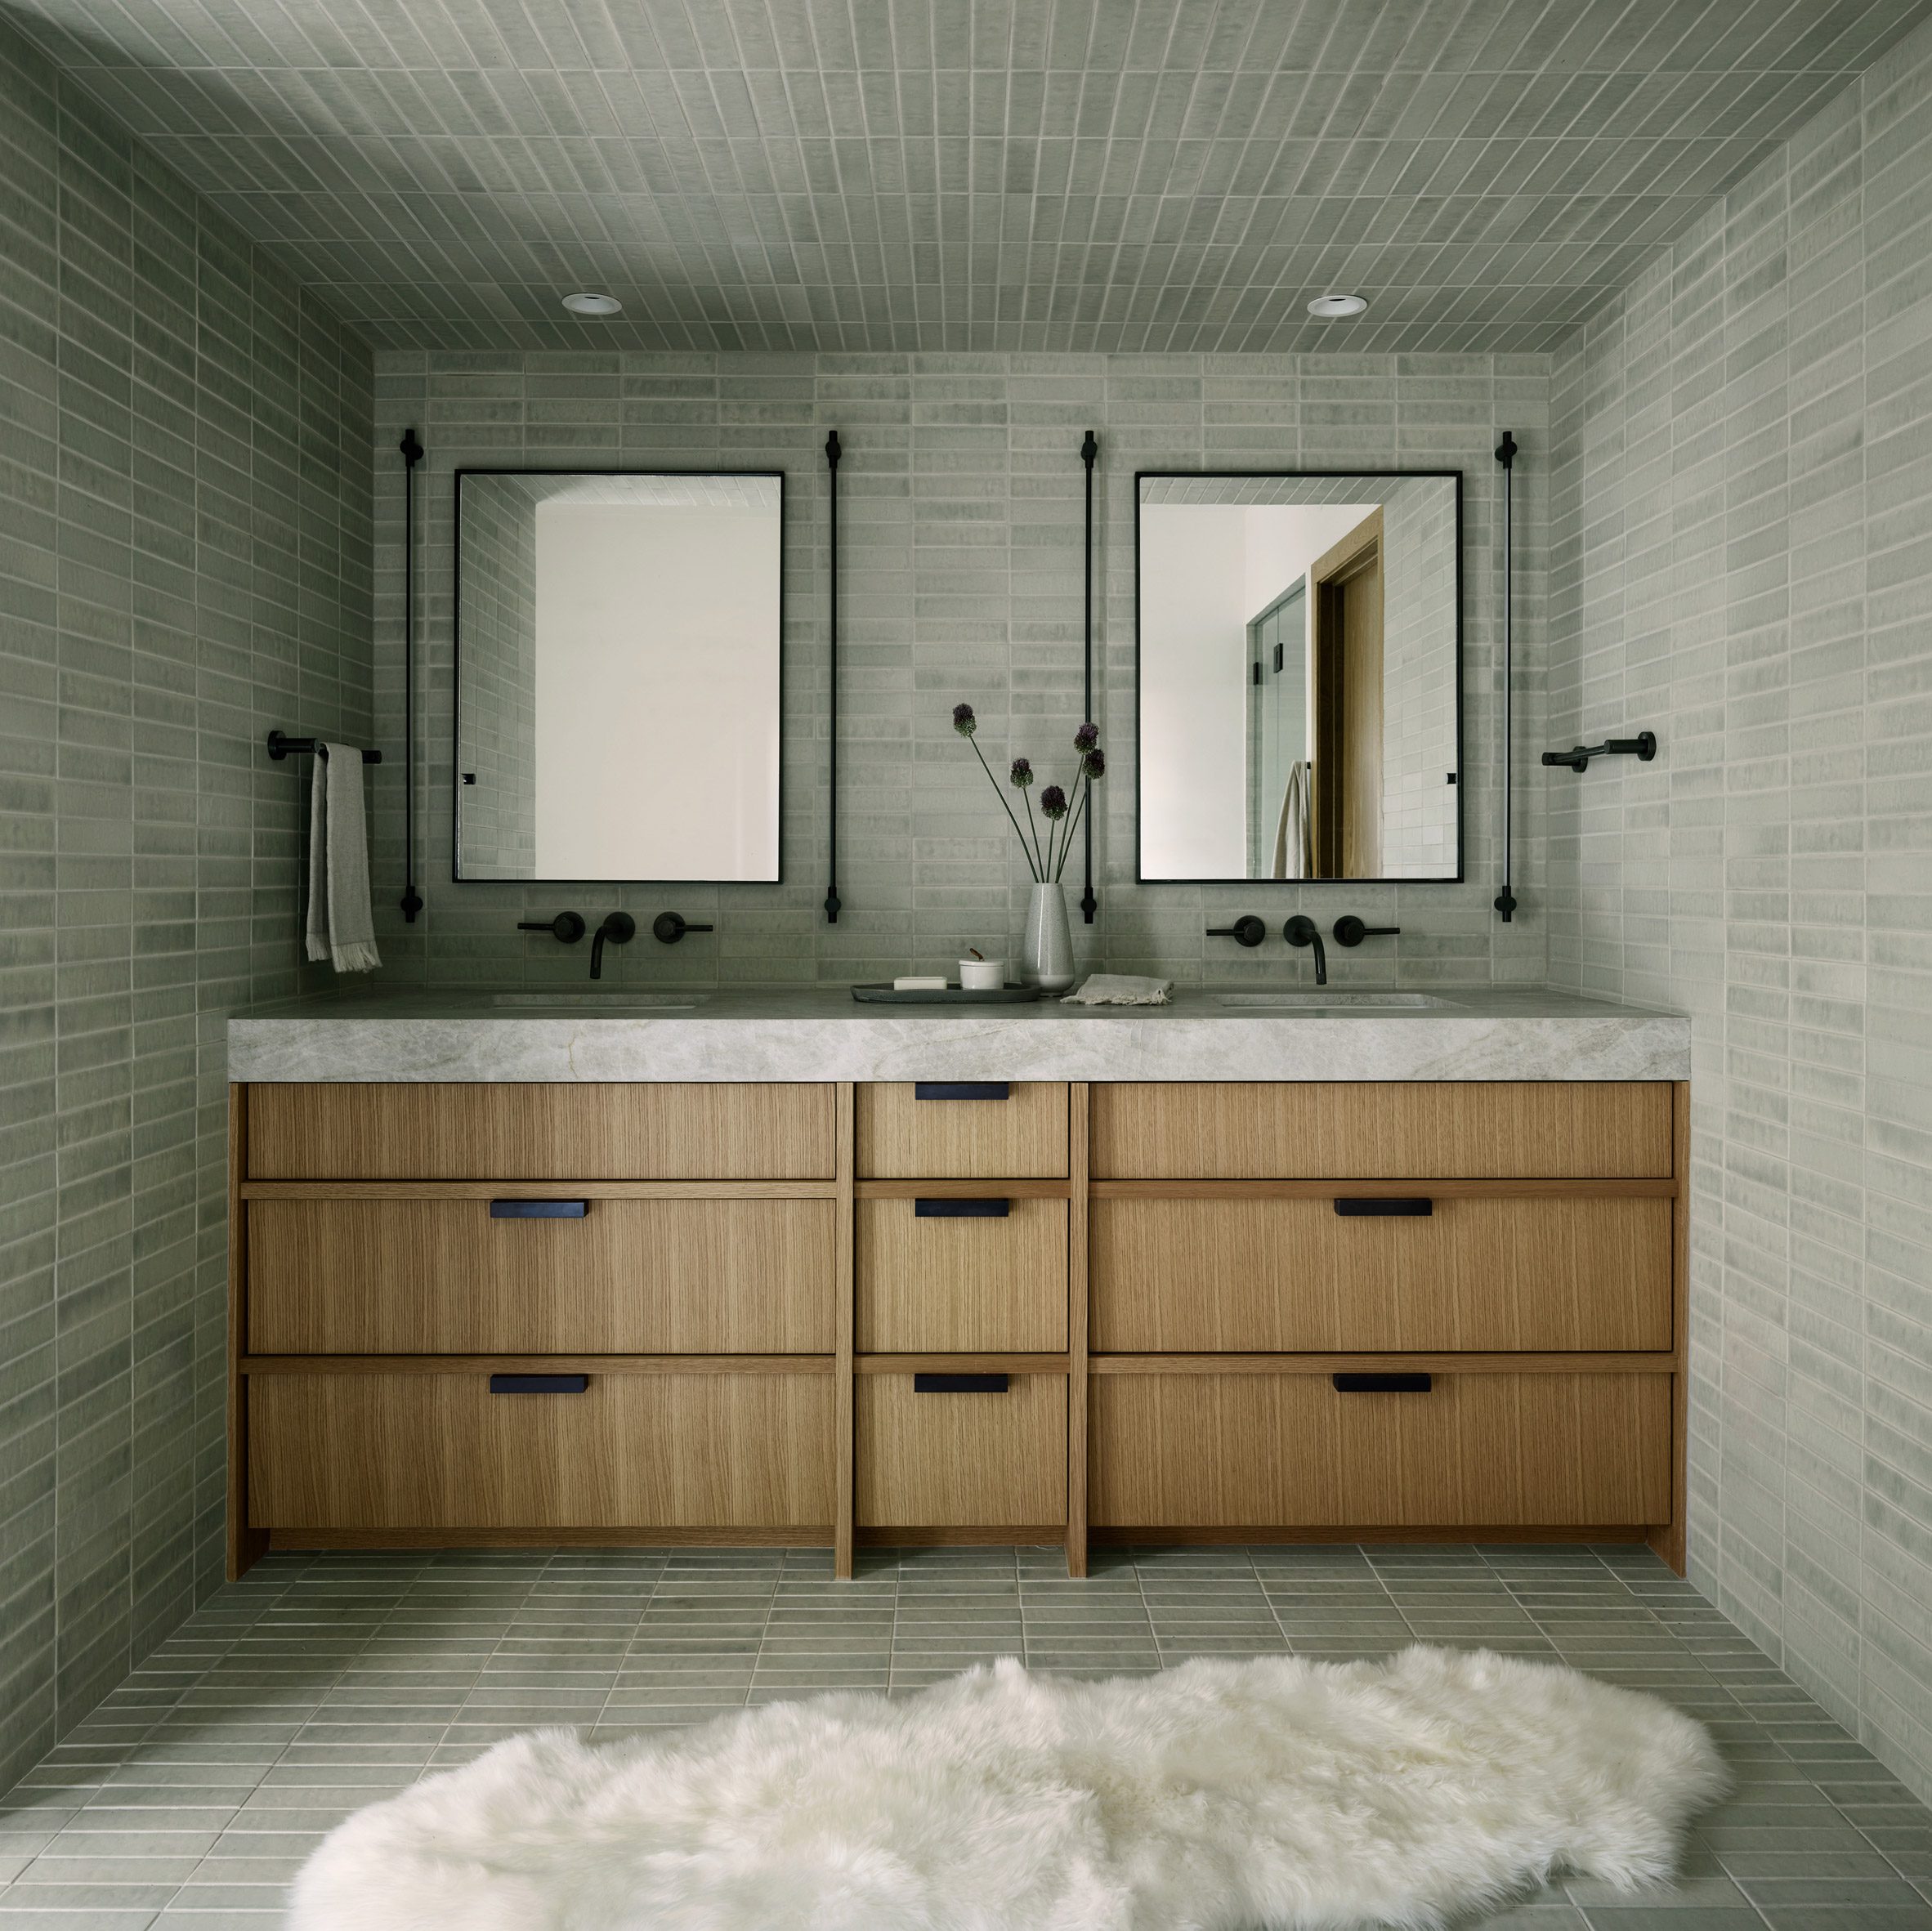 Quartzite vanity within bathroom with stone-hued tiles